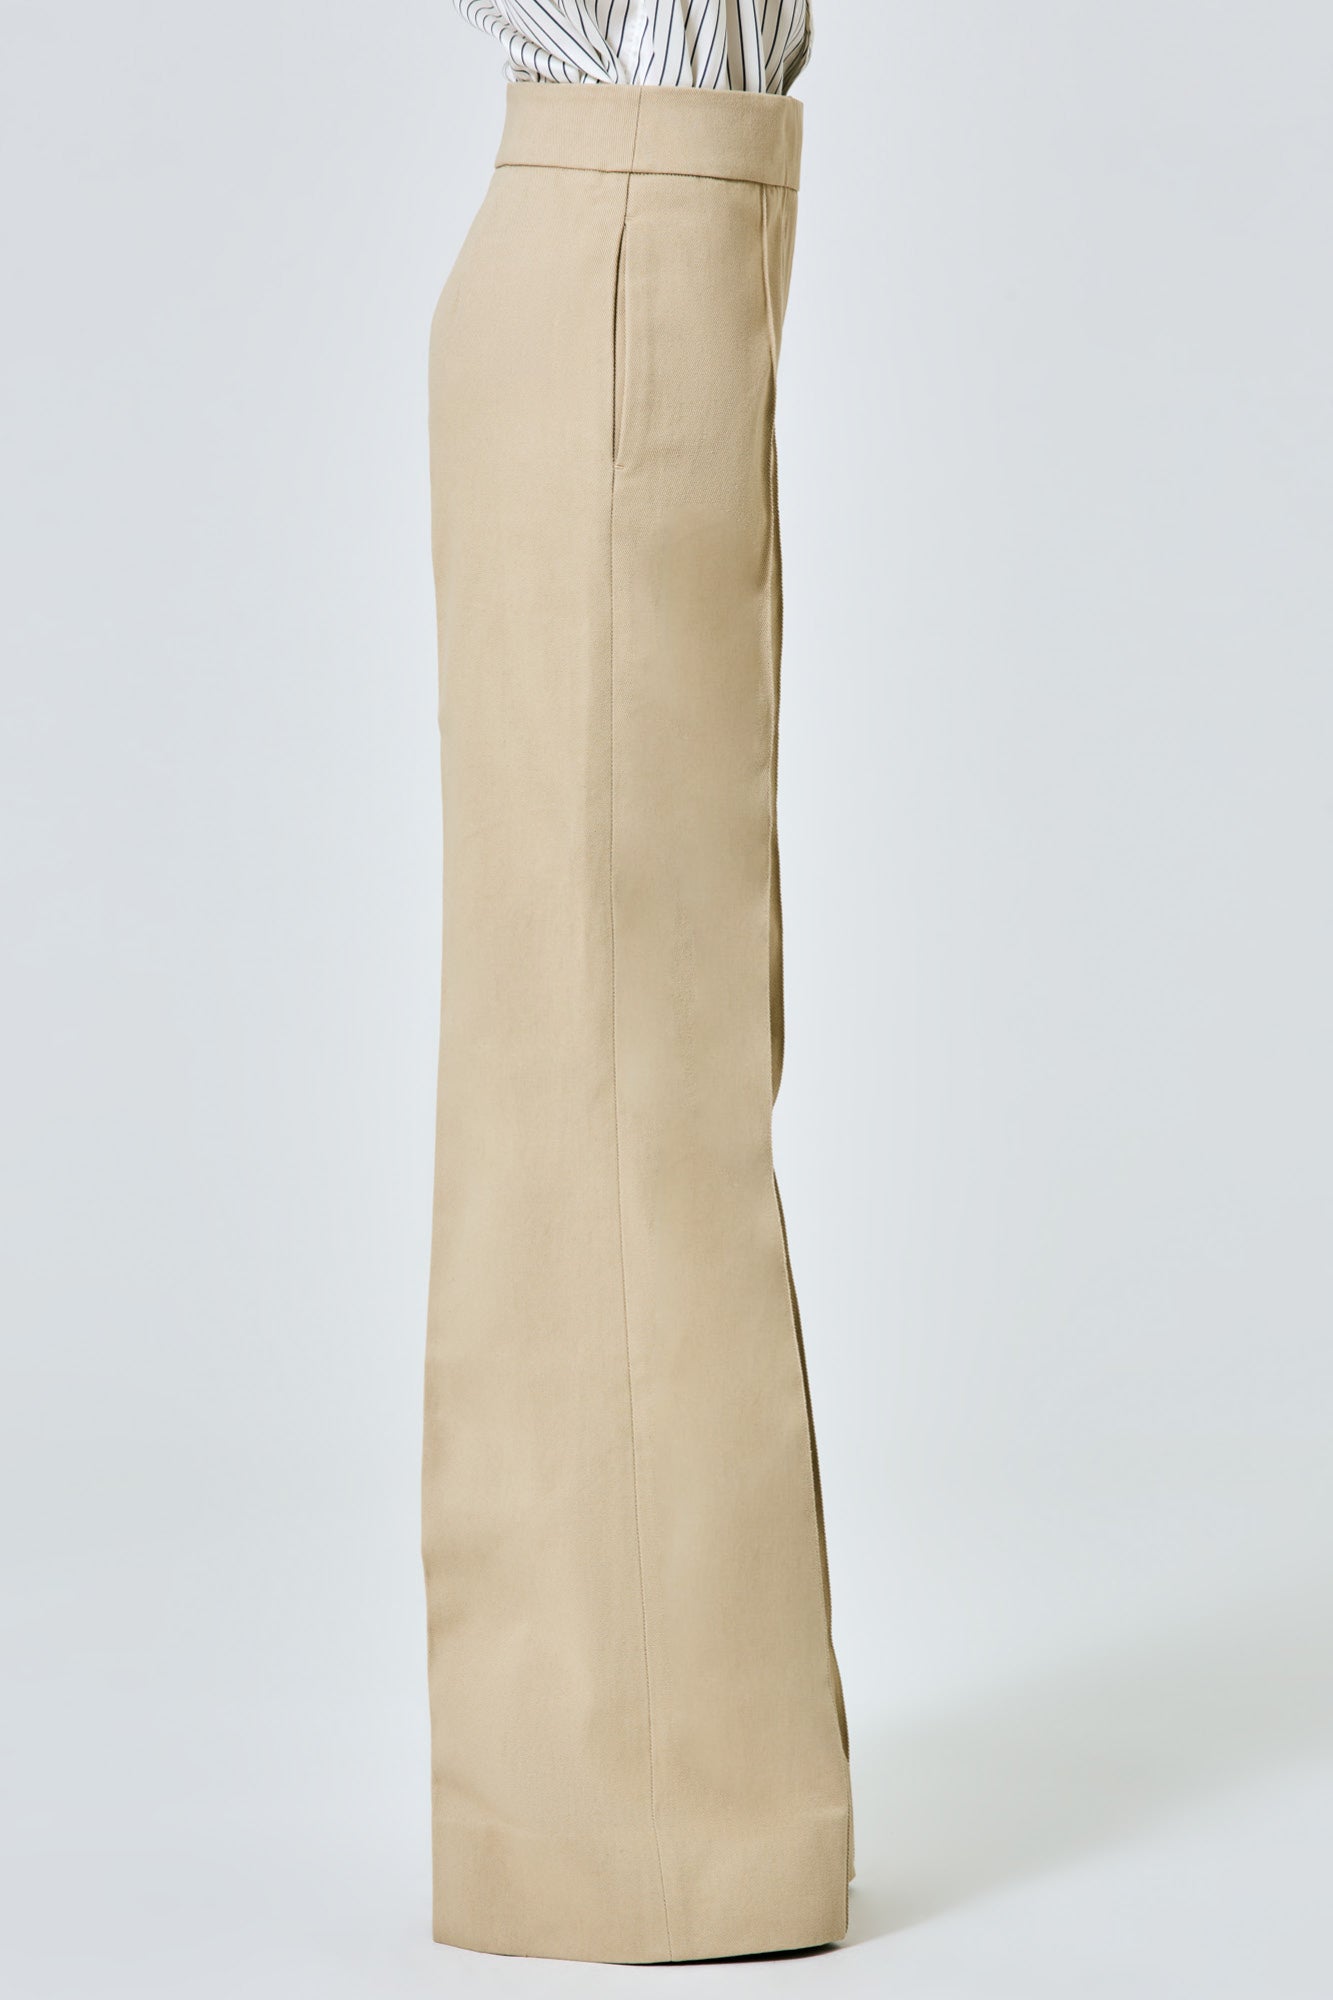 Straight leg thick cotton gabardine trousers